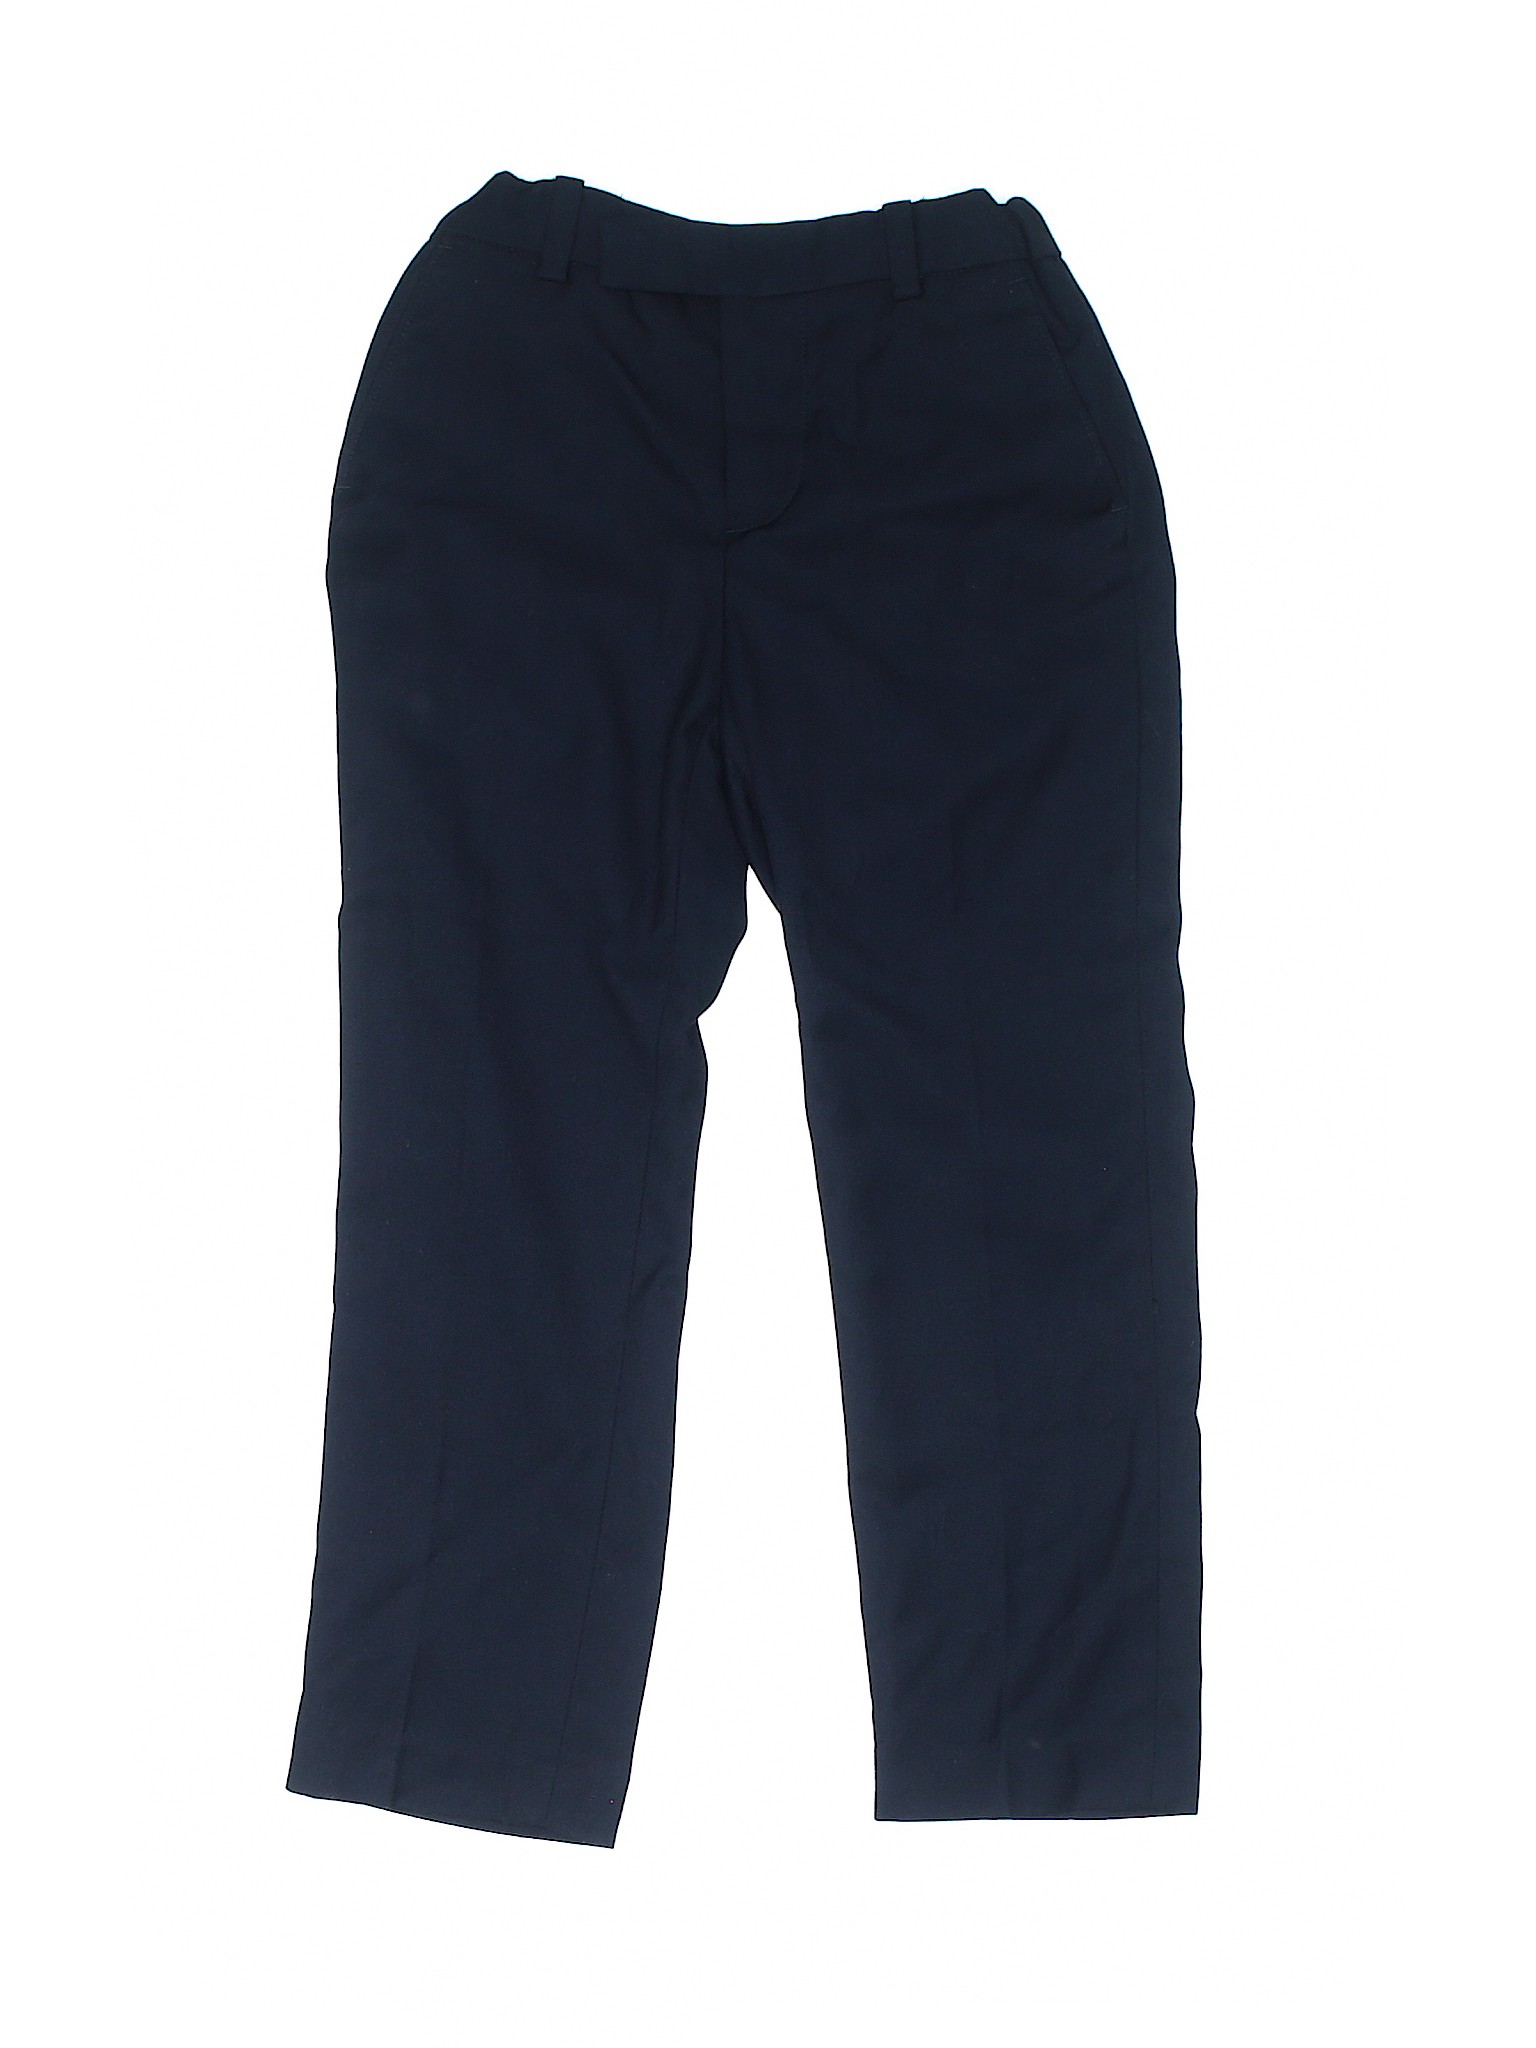 H&M Boys Blue Dress Pants 4 | eBay